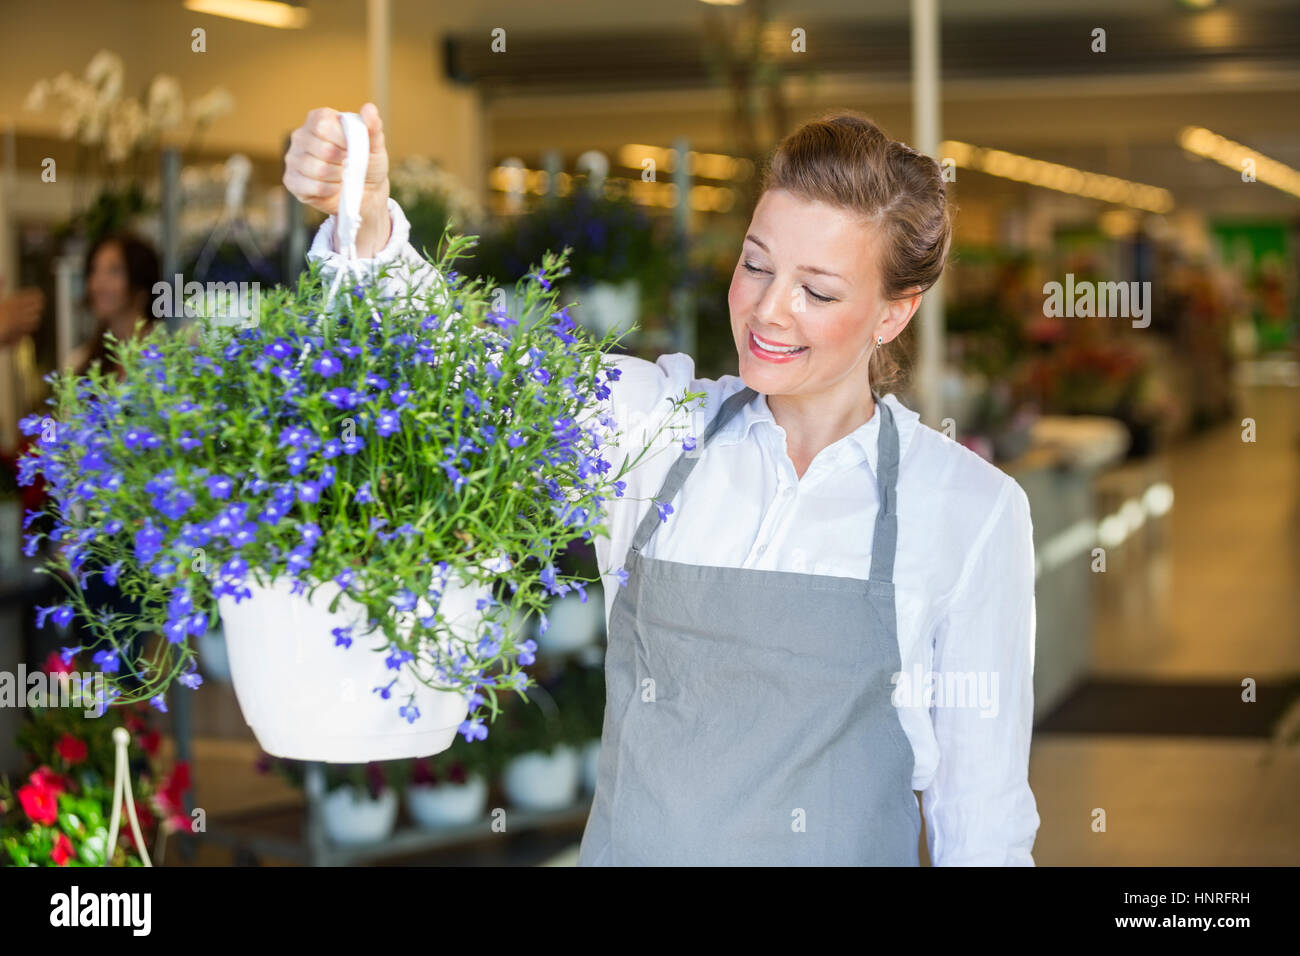 Fleuriste smiling holding purple flower plant in shop Banque D'Images